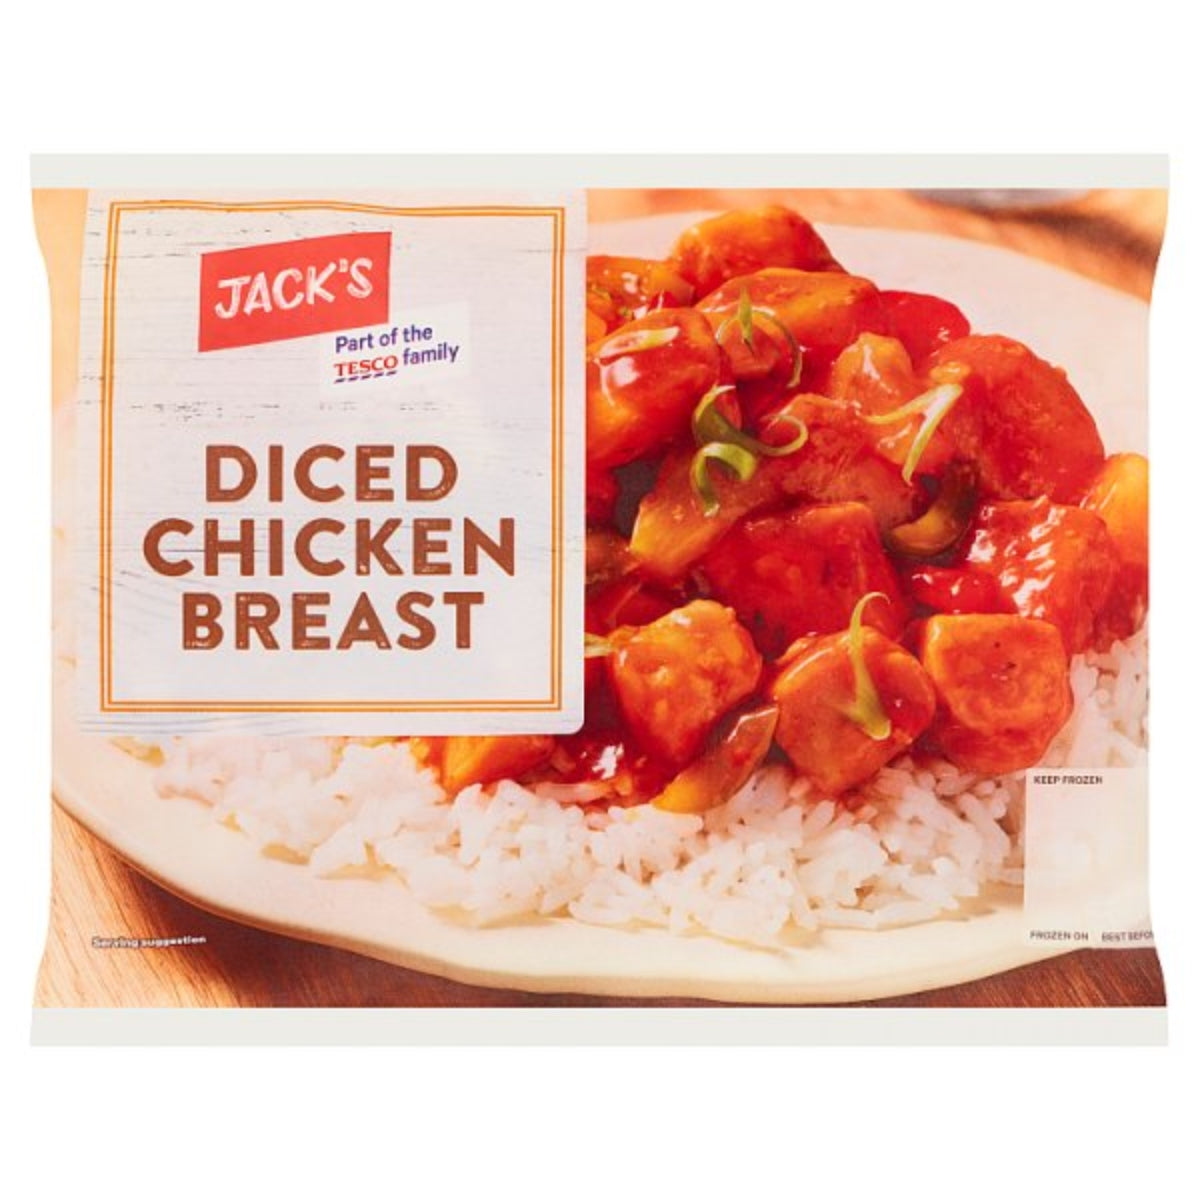 A bag of Jacks - Diced Chicken Breast - 350g.